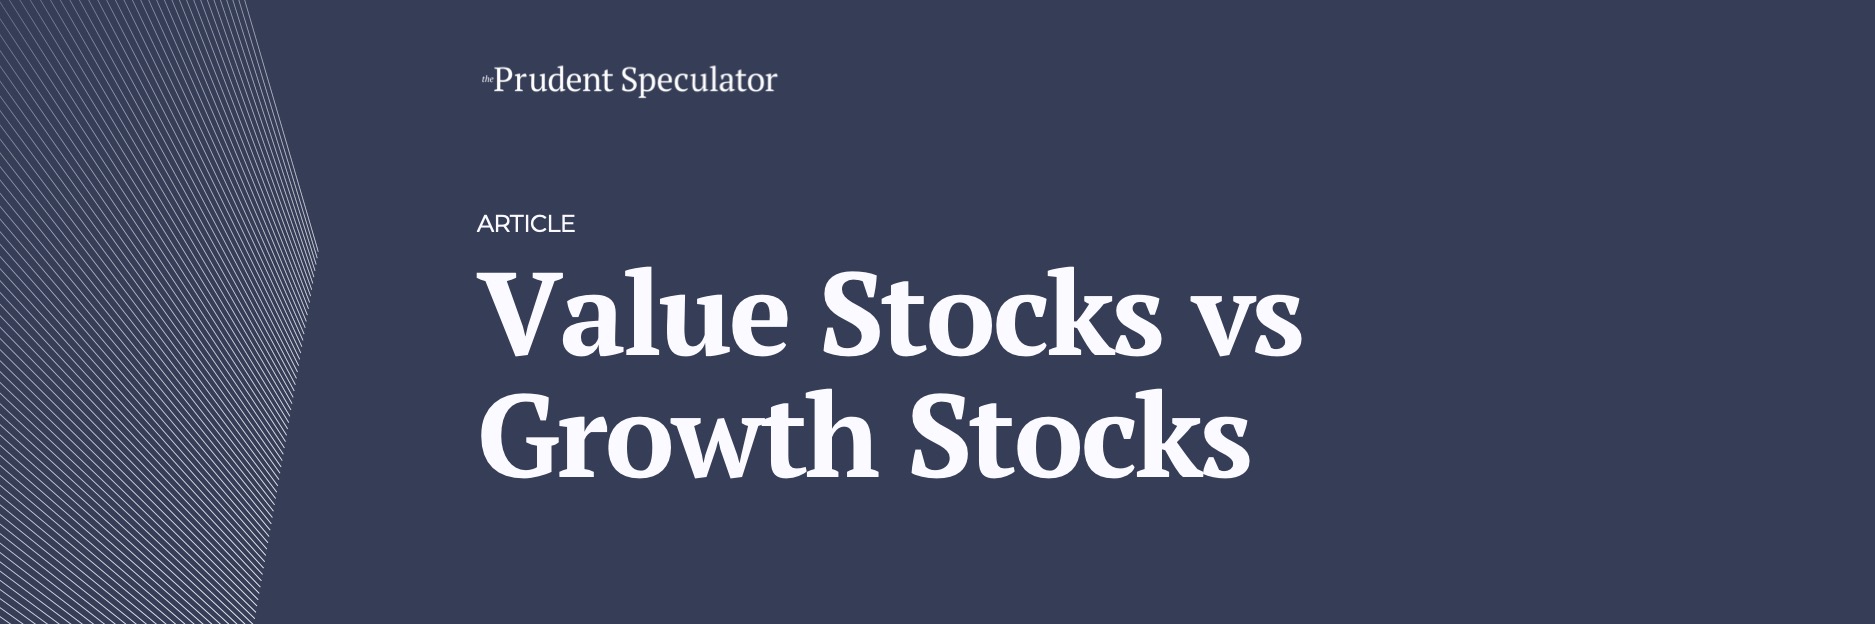 Value stocks